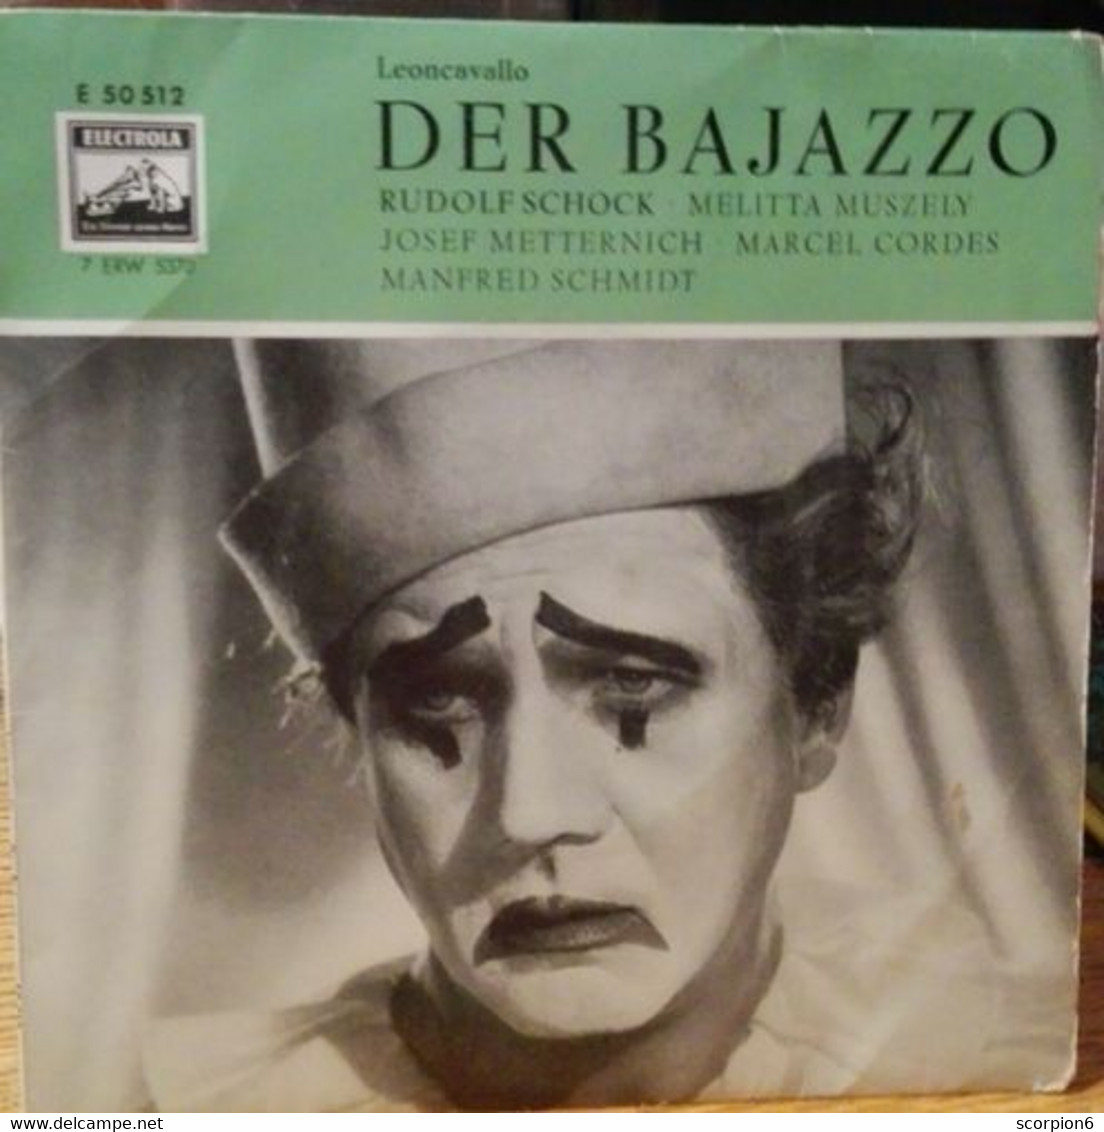 7" Single - Leoncavallo - Rudolf Schock - Der Bajazzo - Classical